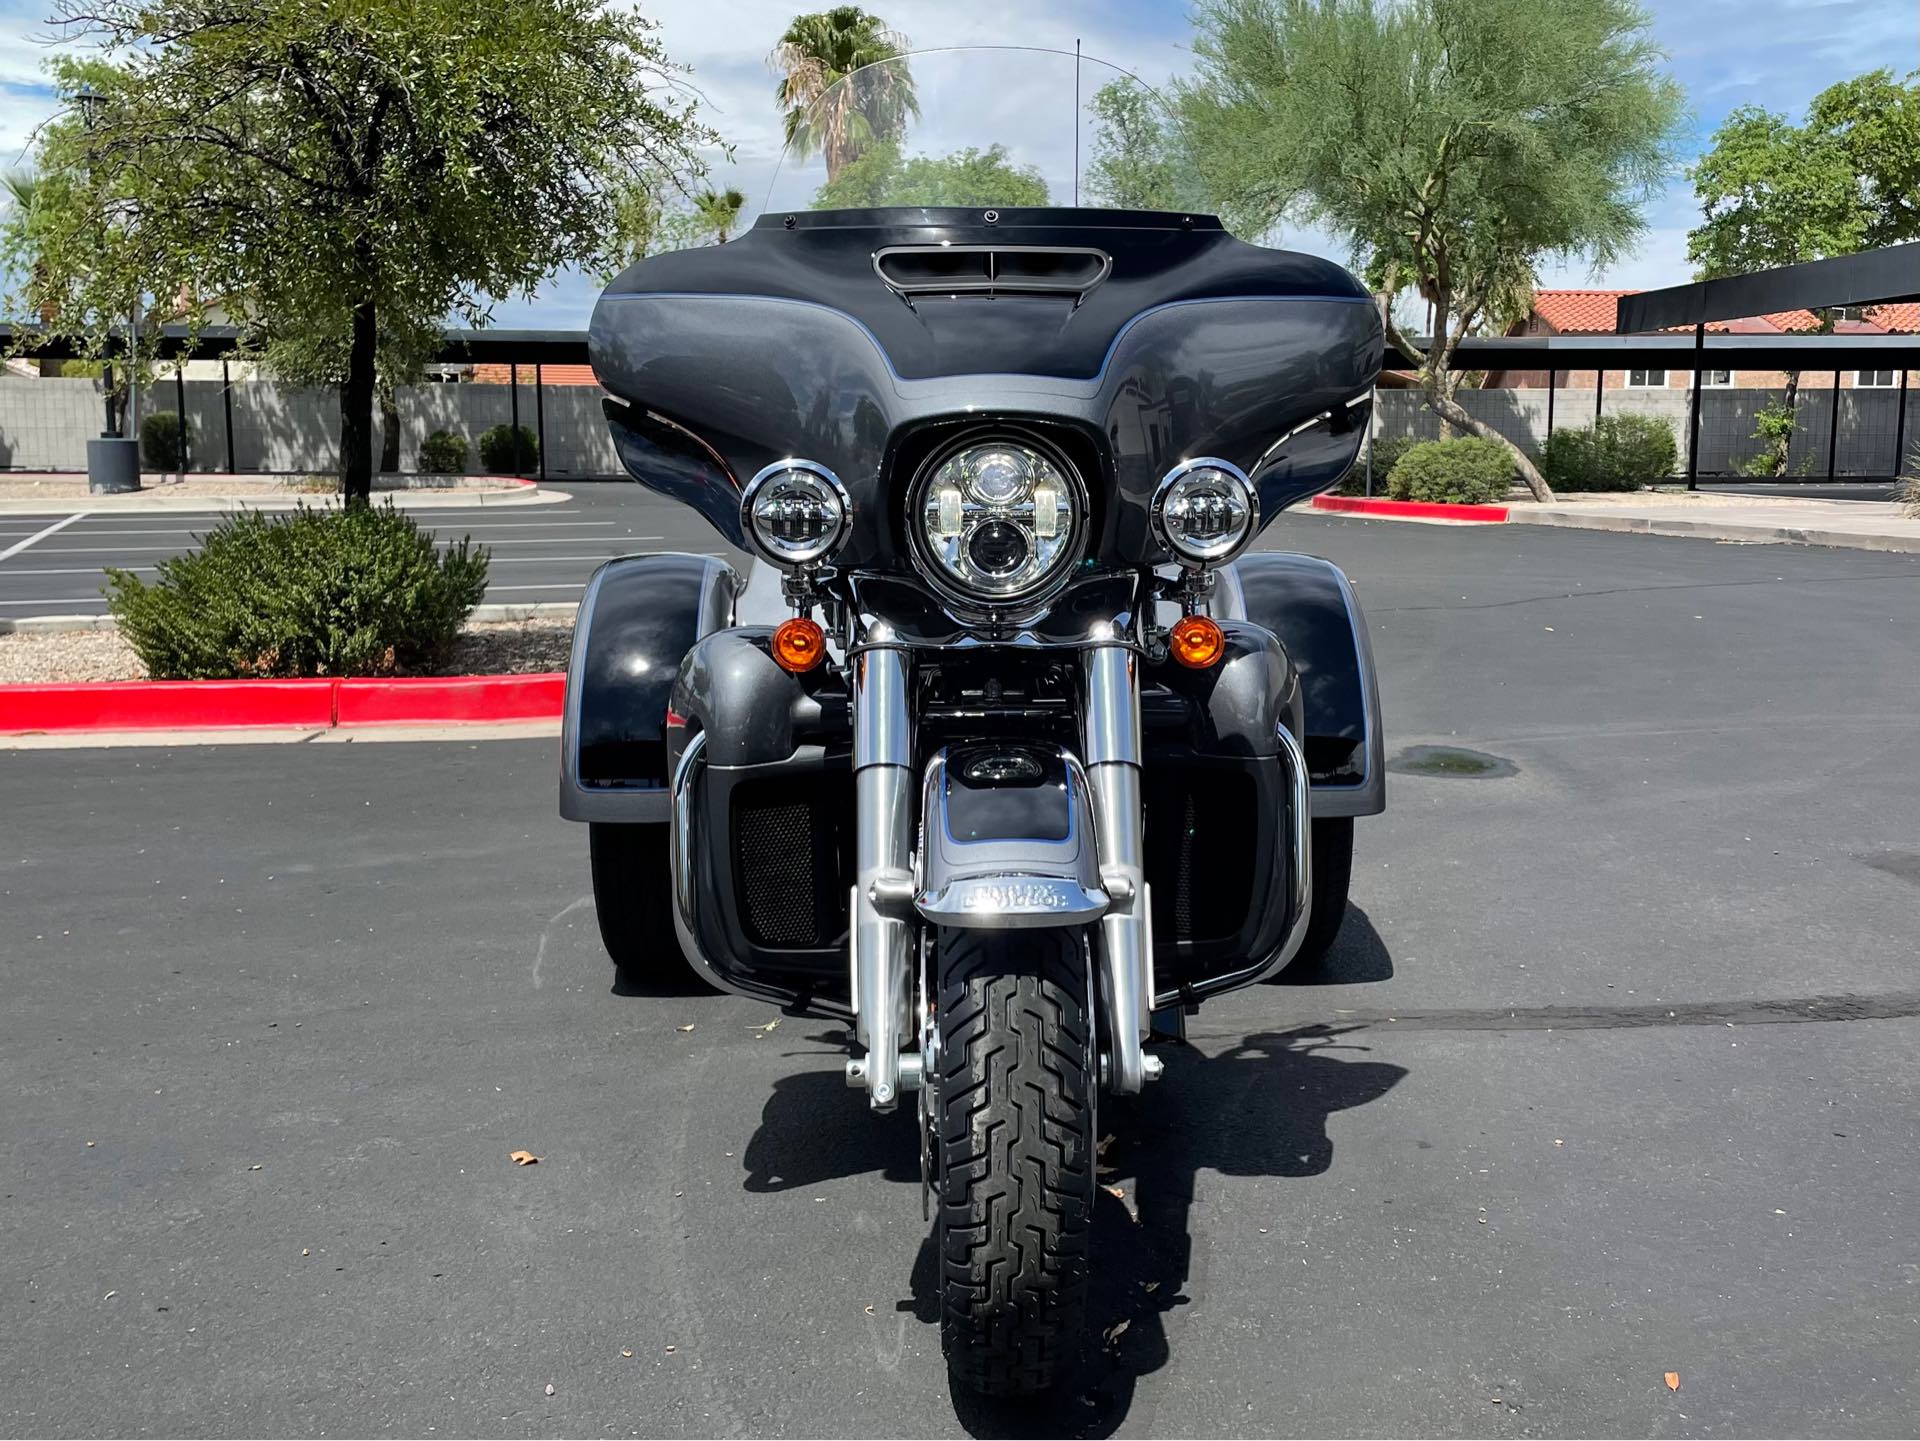 2022 Harley-Davidson Trike Tri Glide Ultra at Buddy Stubbs Arizona Harley-Davidson